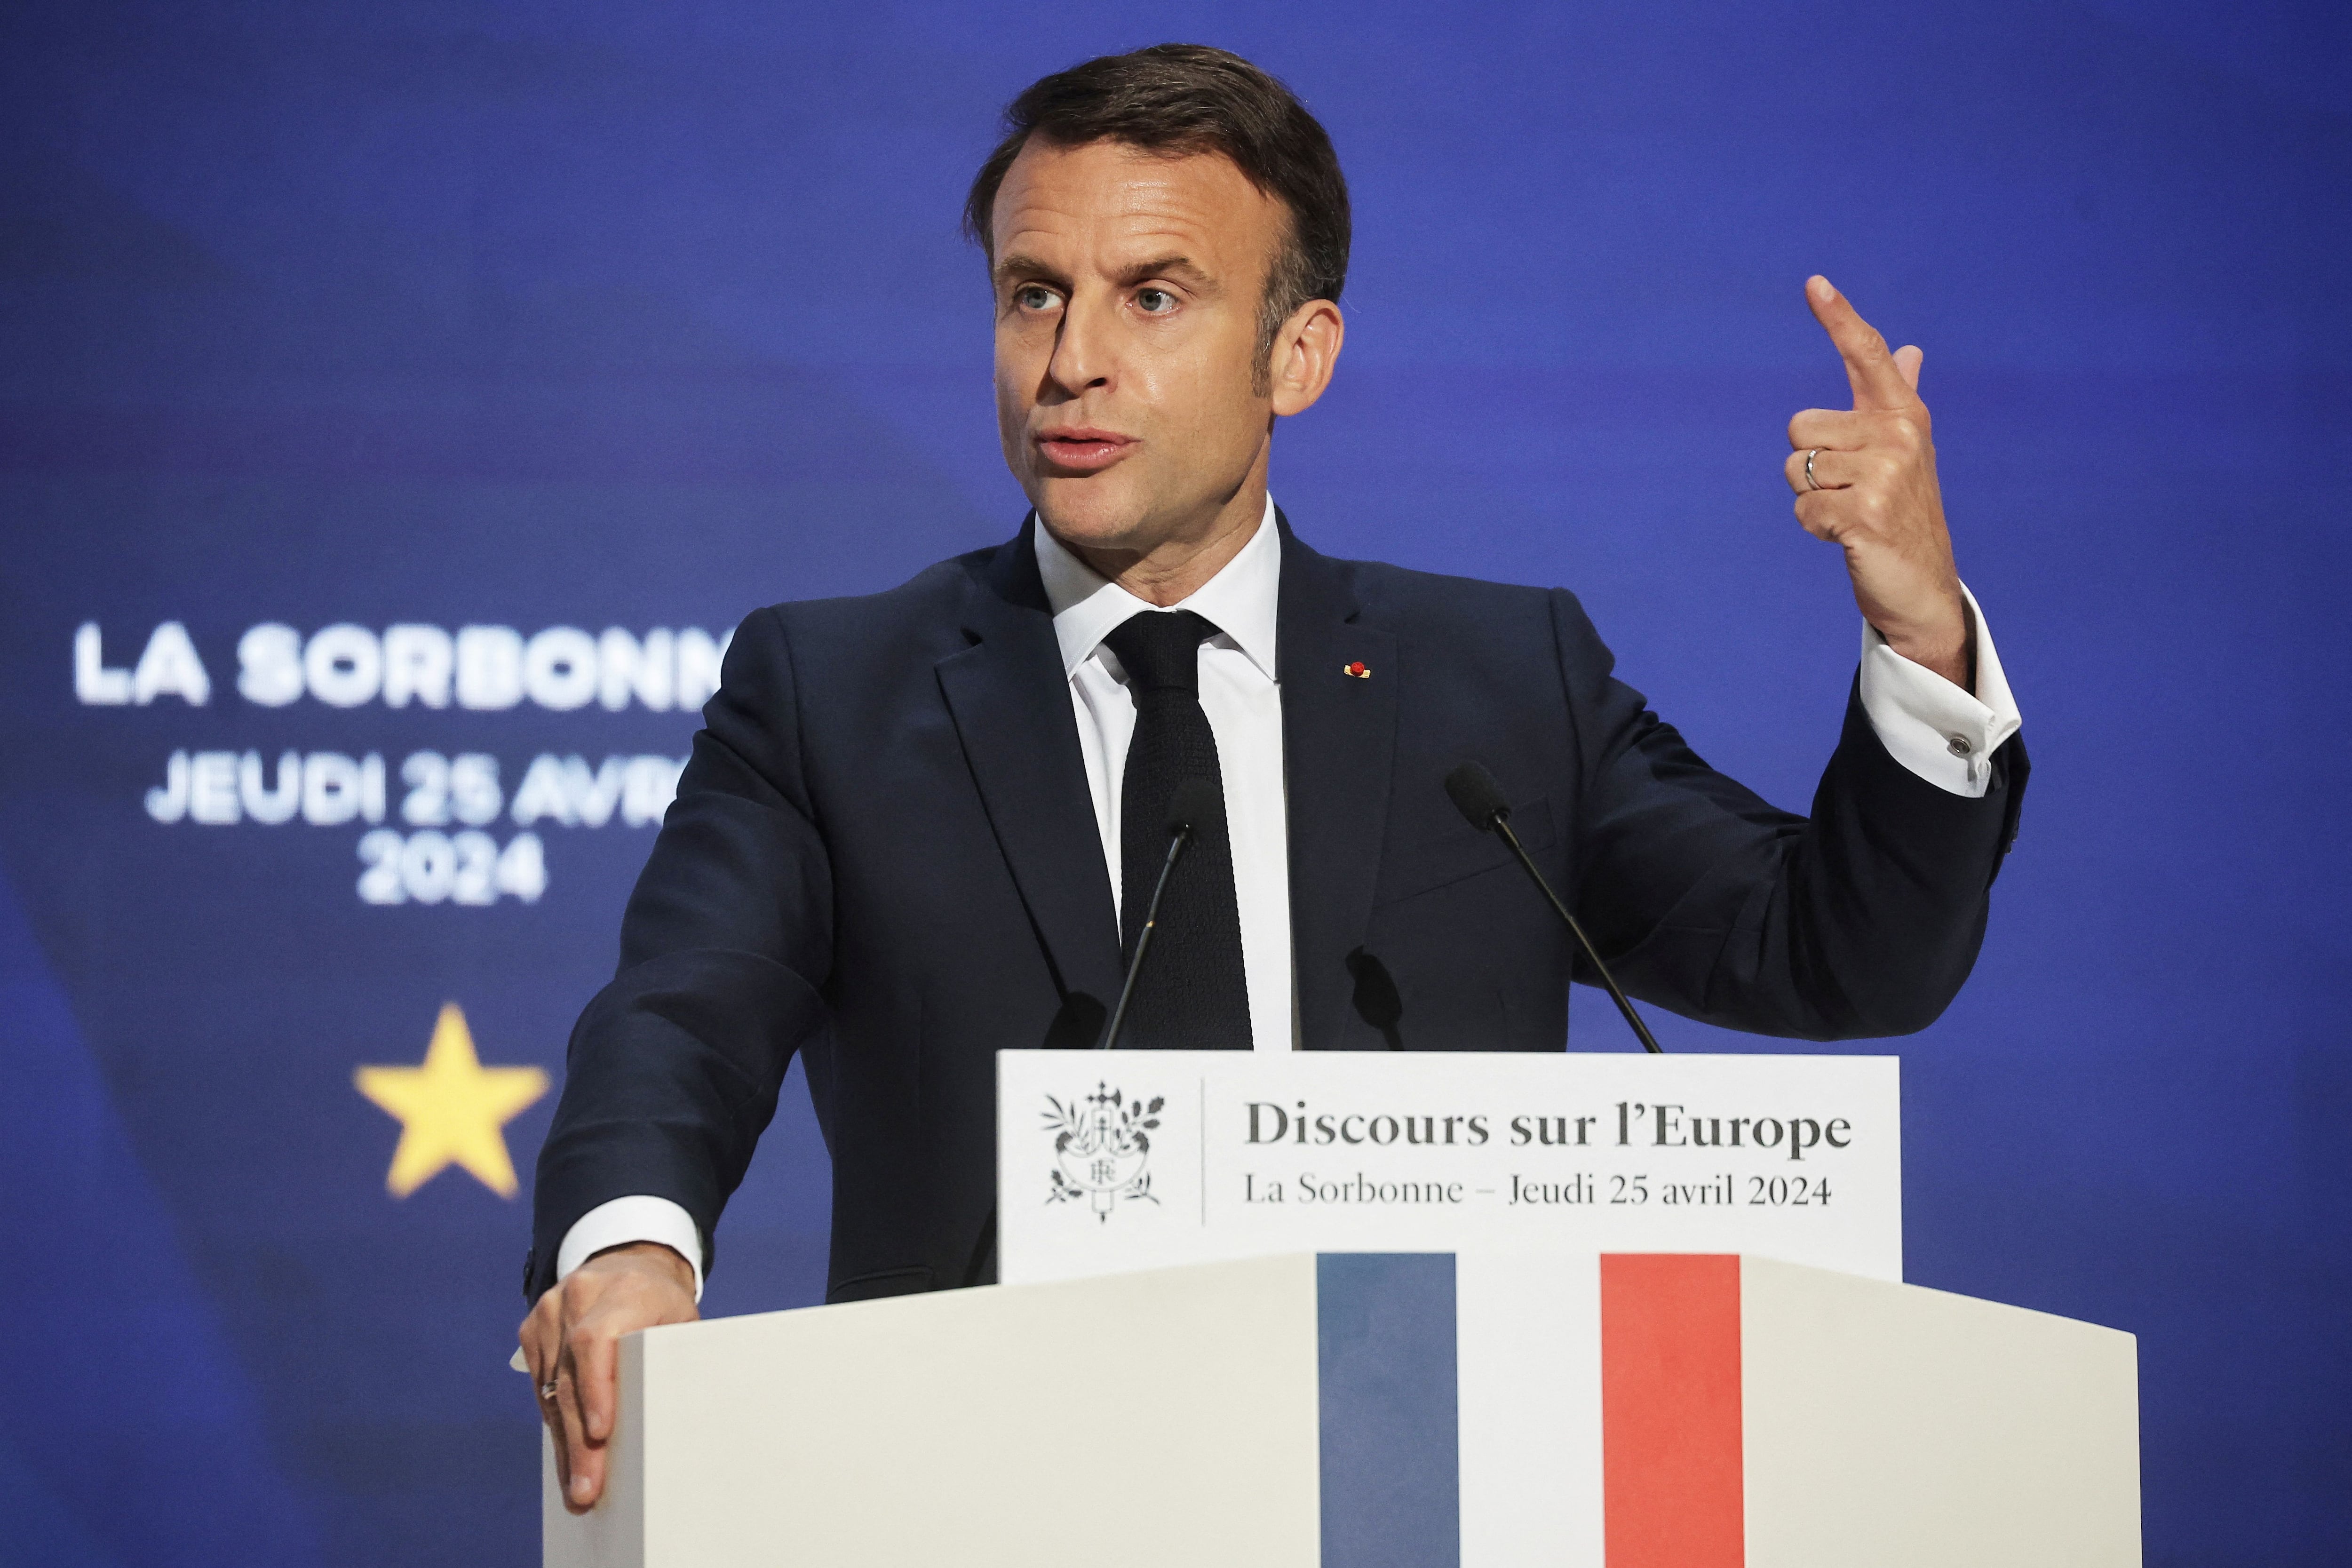 El presidente francés Emmanuel Macron pronunció un discurso sobre Europa en el anfiteatro de la Universidad de la Sorbona en París este 25 de abril de 2024 (Christophe Petit Tesson/REUTERS)